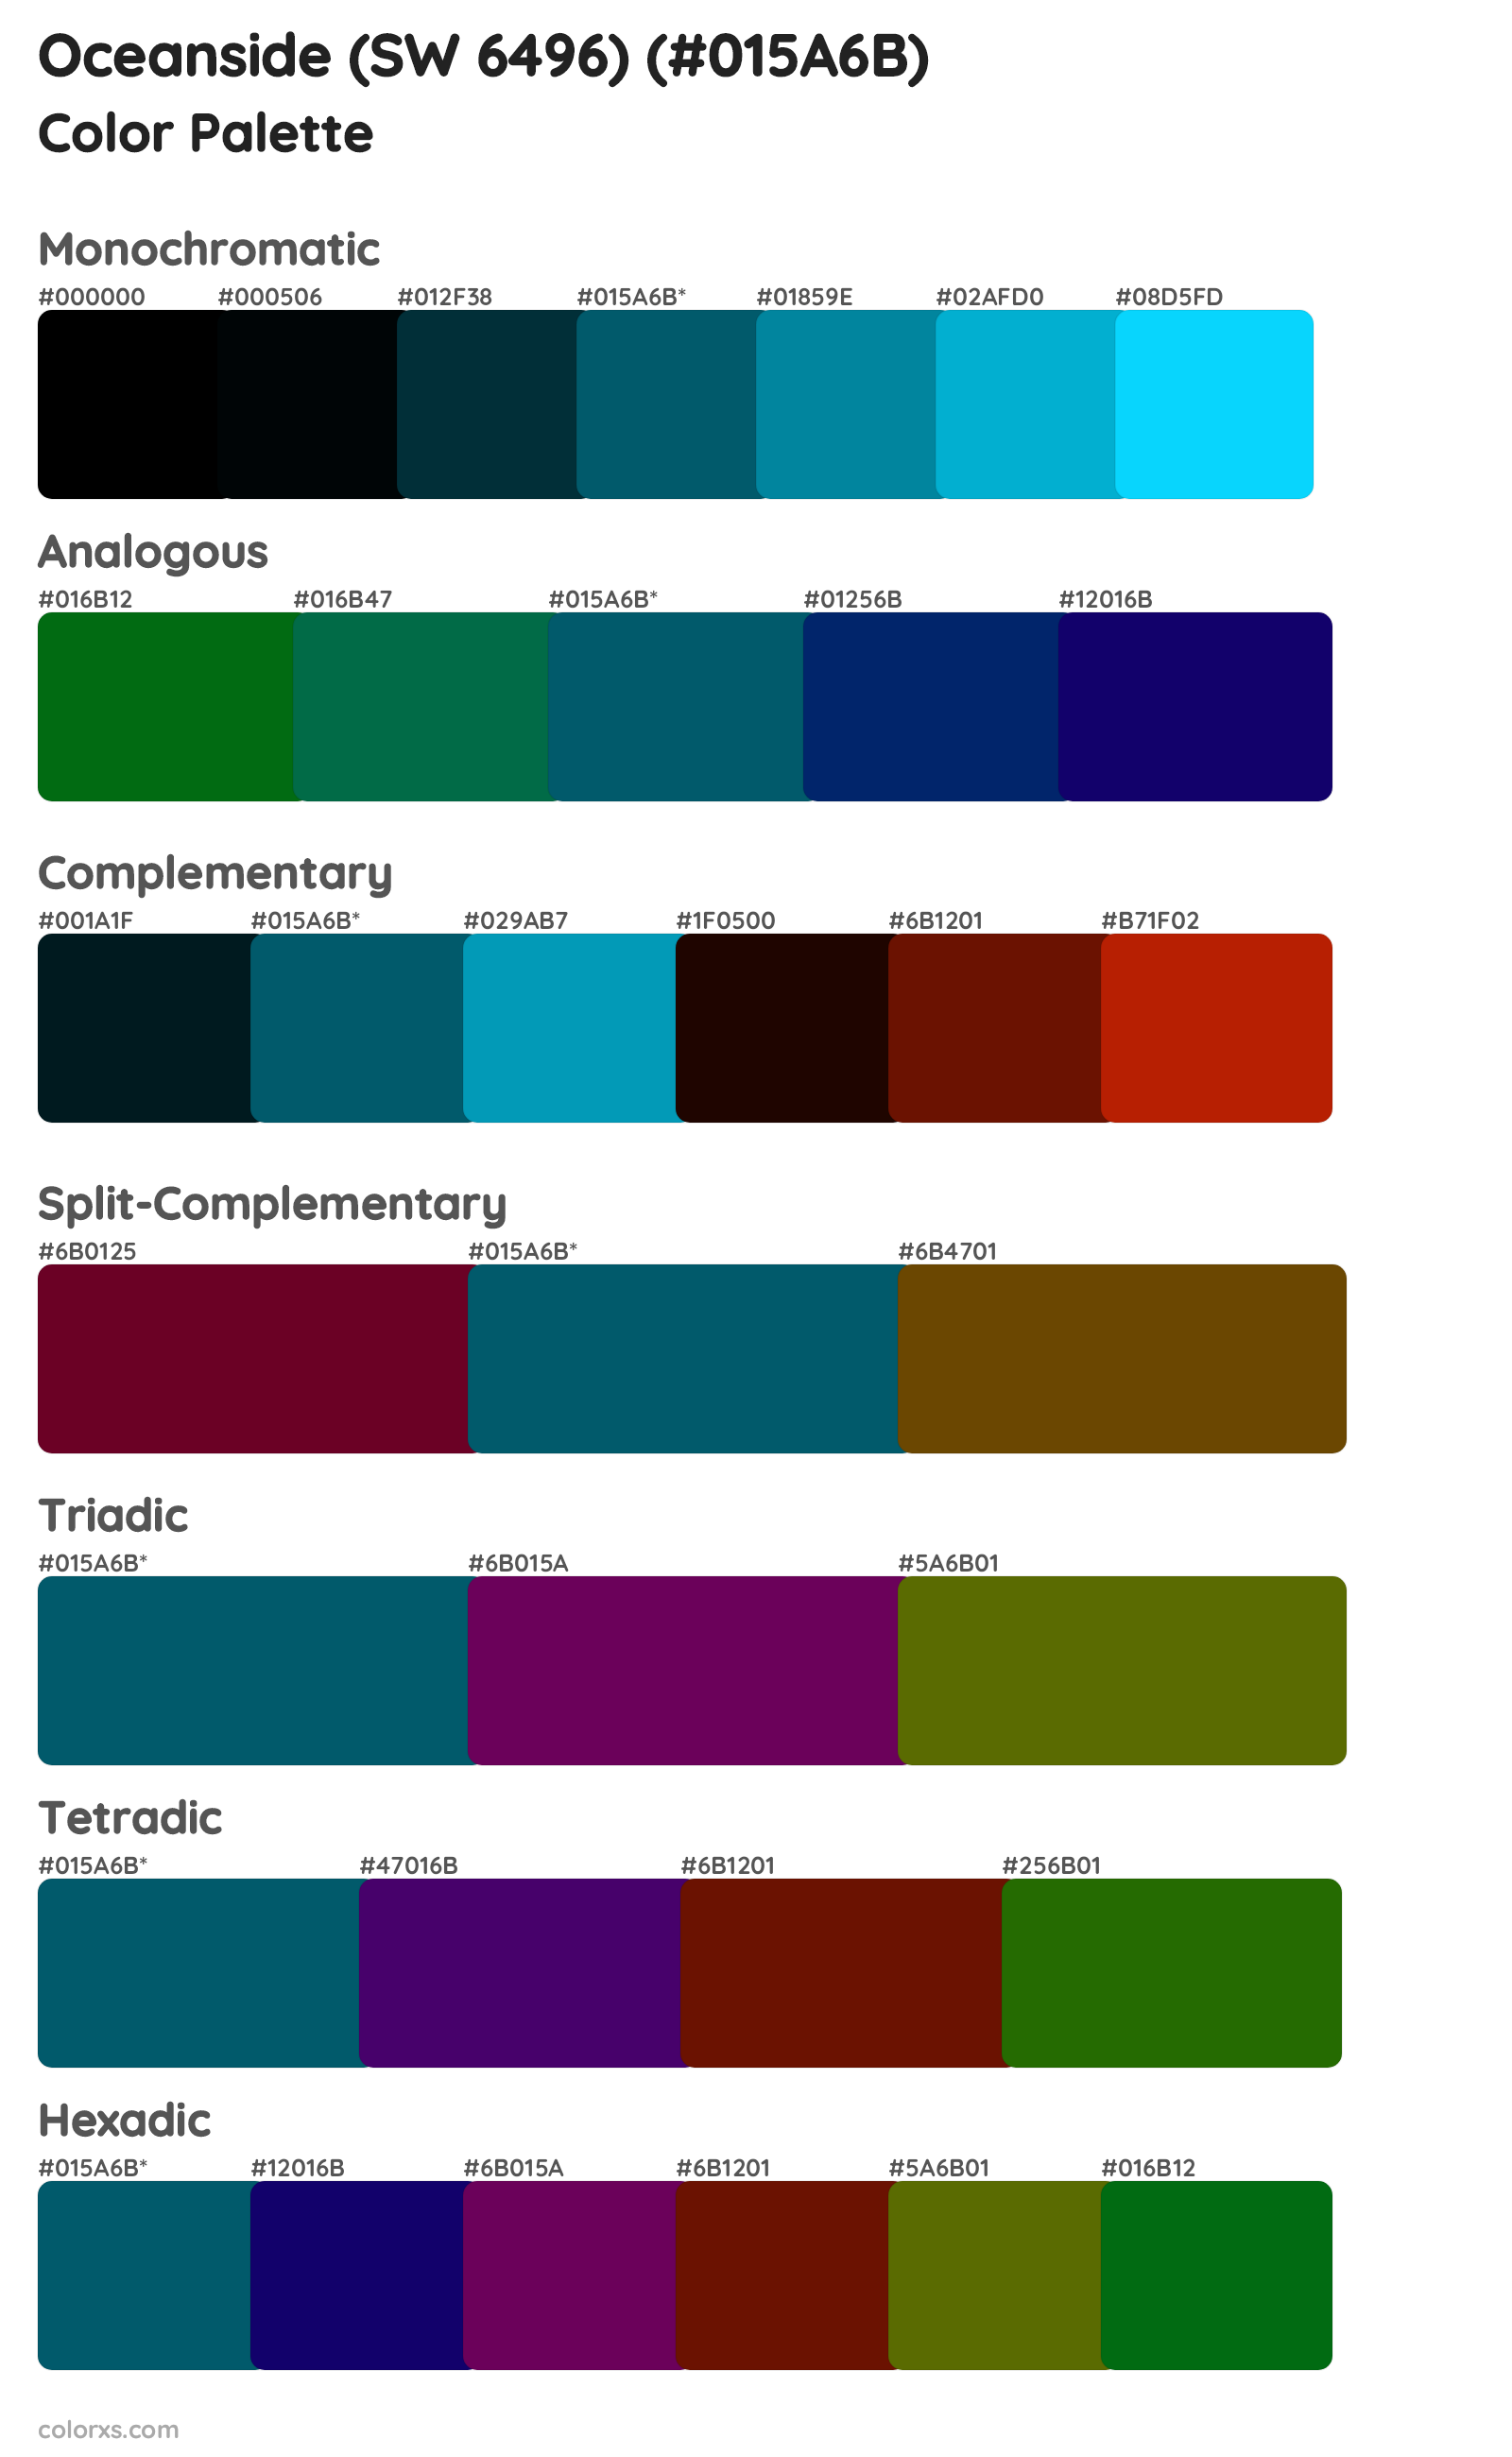 Oceanside (SW 6496) Color Scheme Palettes